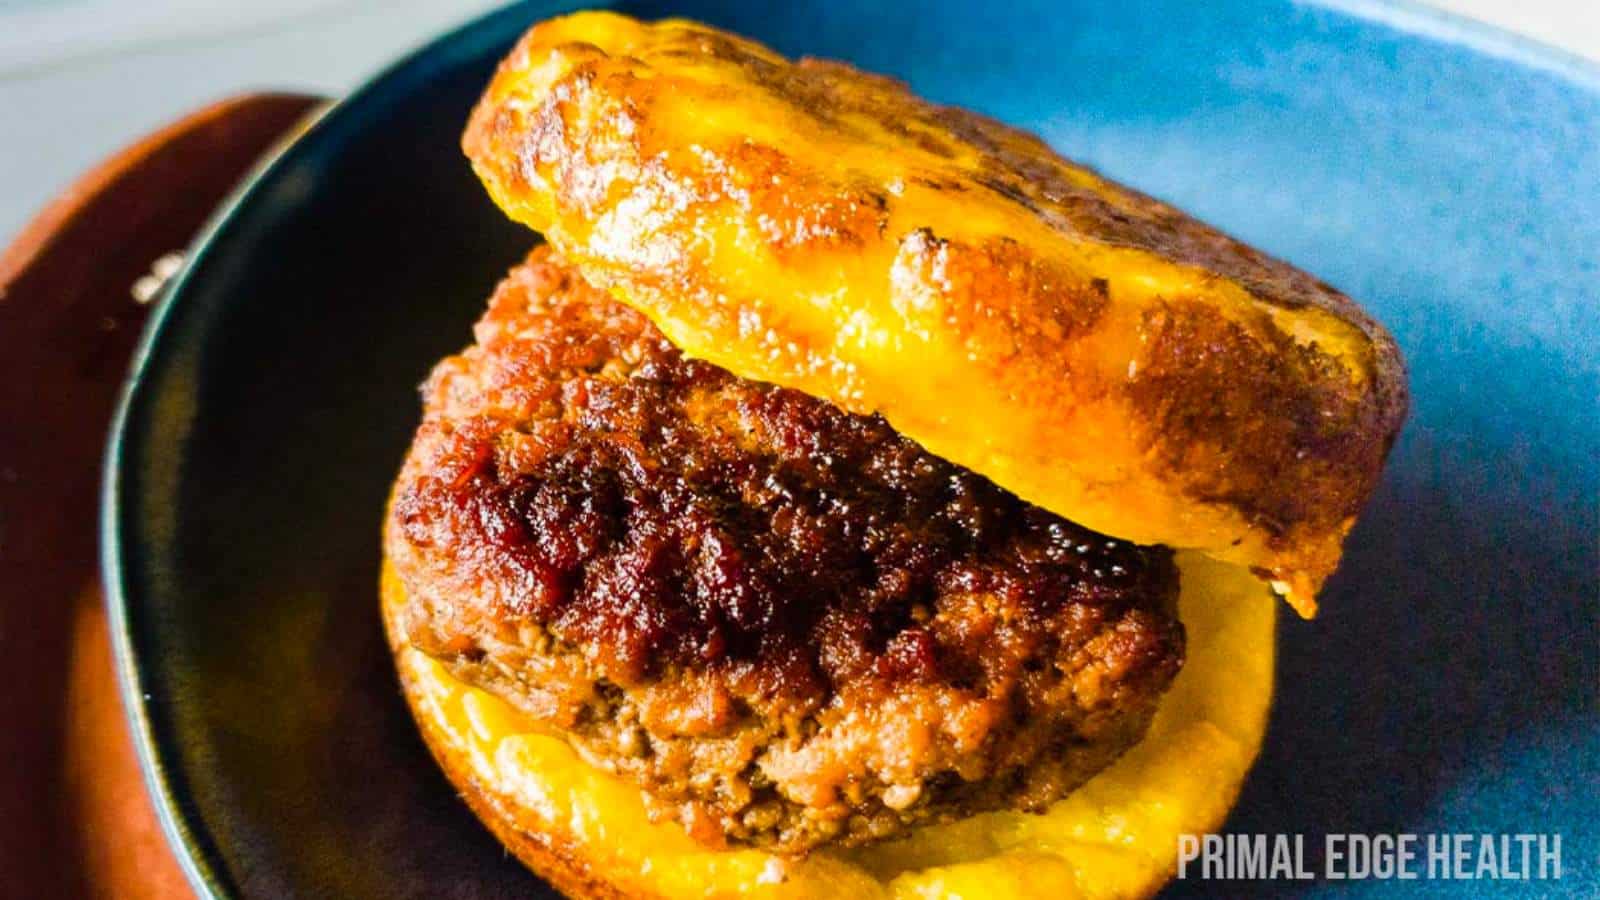 A hamburger patty is sitting on a plate.